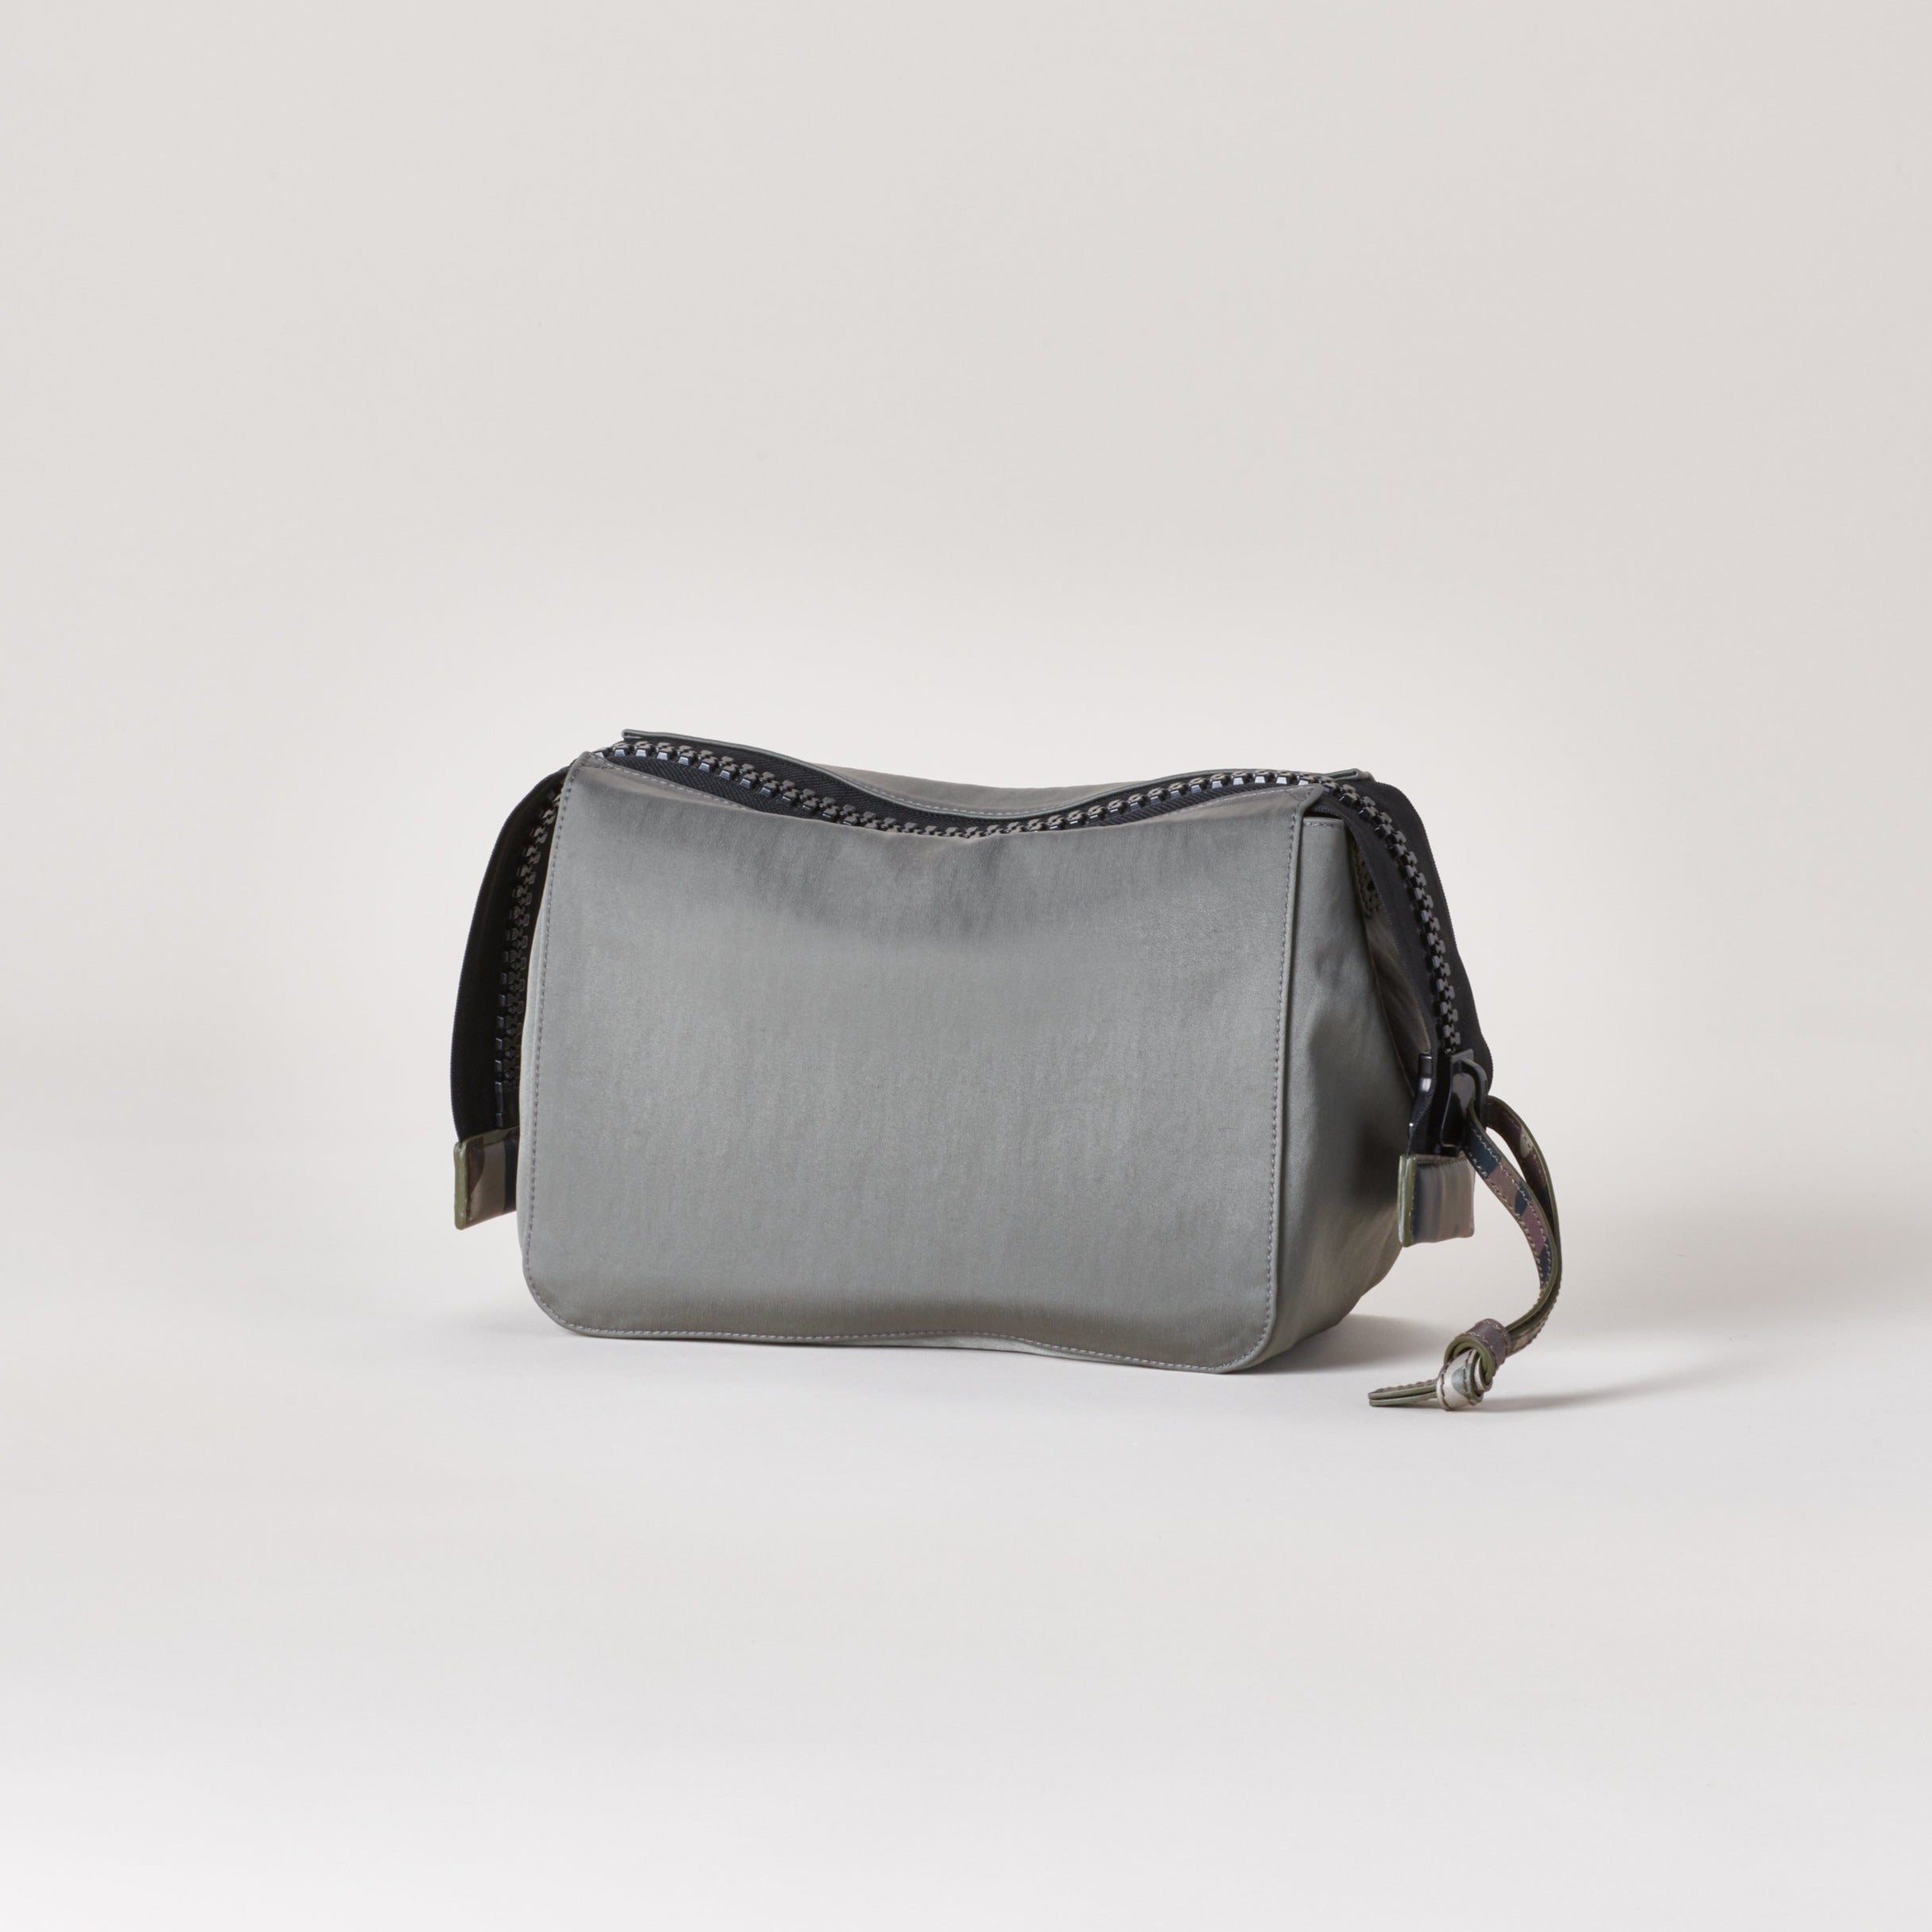 Bag Essentials #Houlihans #SoWinningT  Handbag essentials, Purse essentials,  Work bag essentials